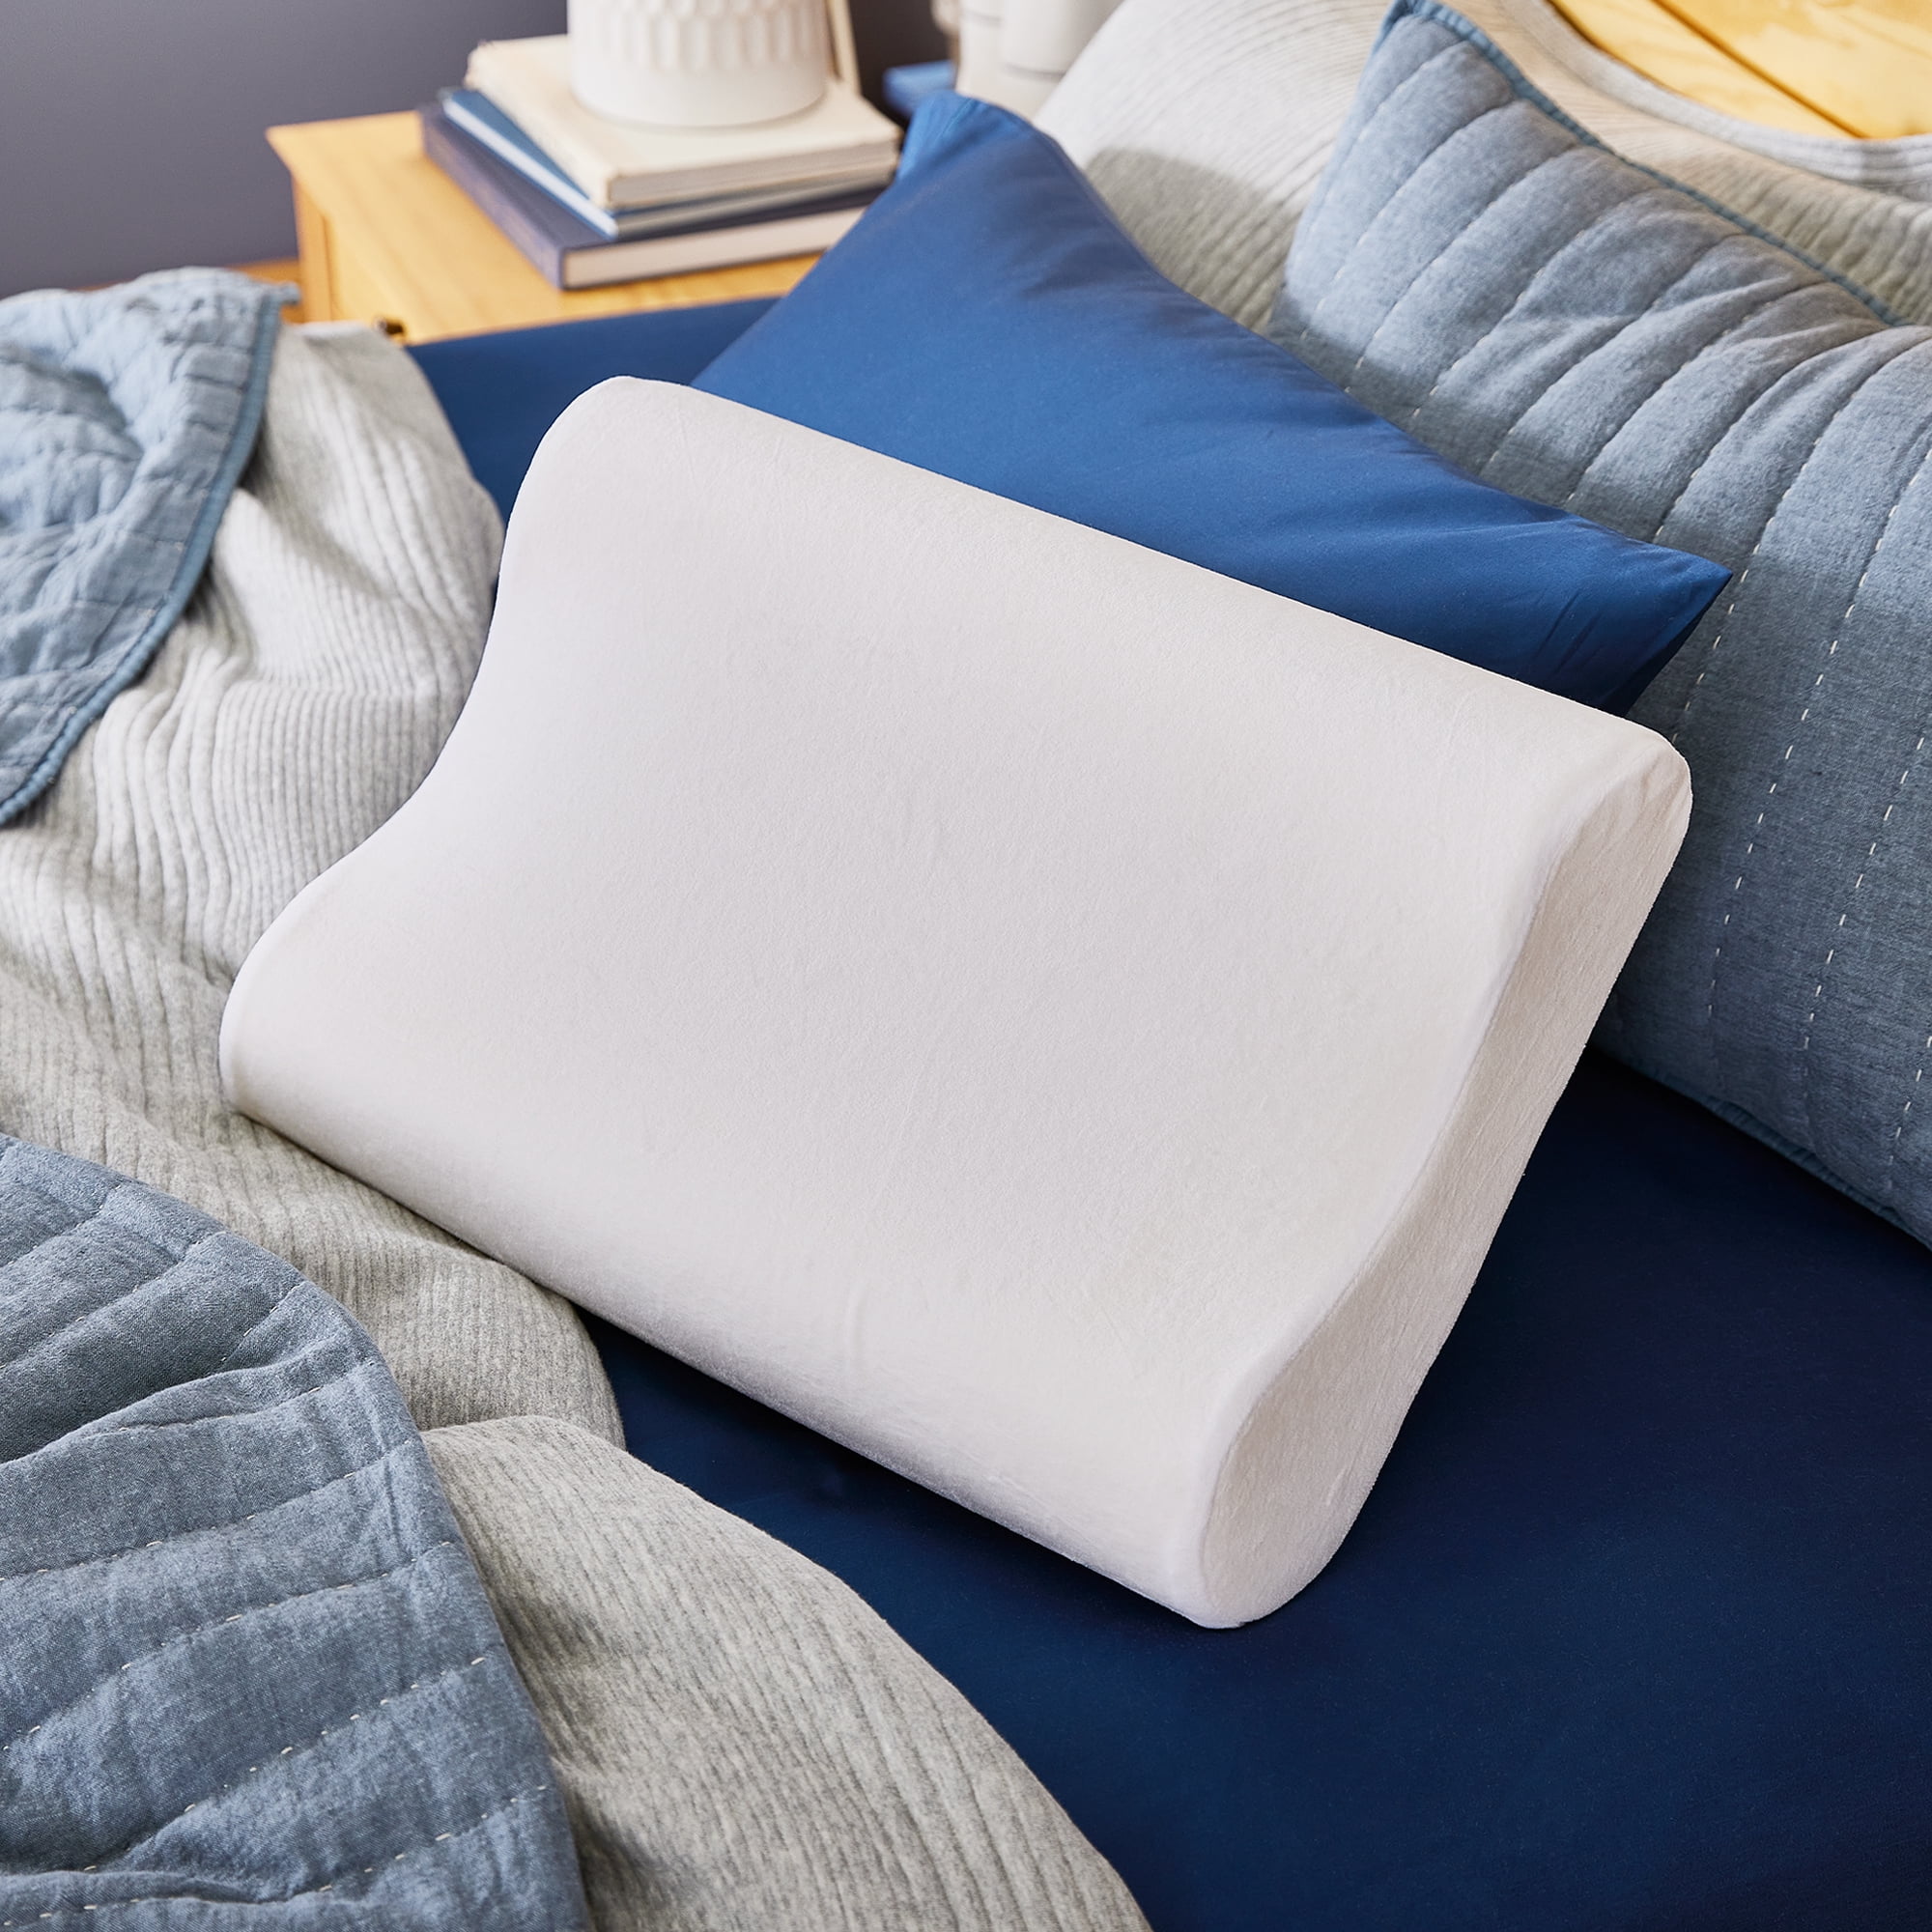 2 Size Soft Pillowcase Pillow Case Cover For Contour Memory Foam Neck Pillow 